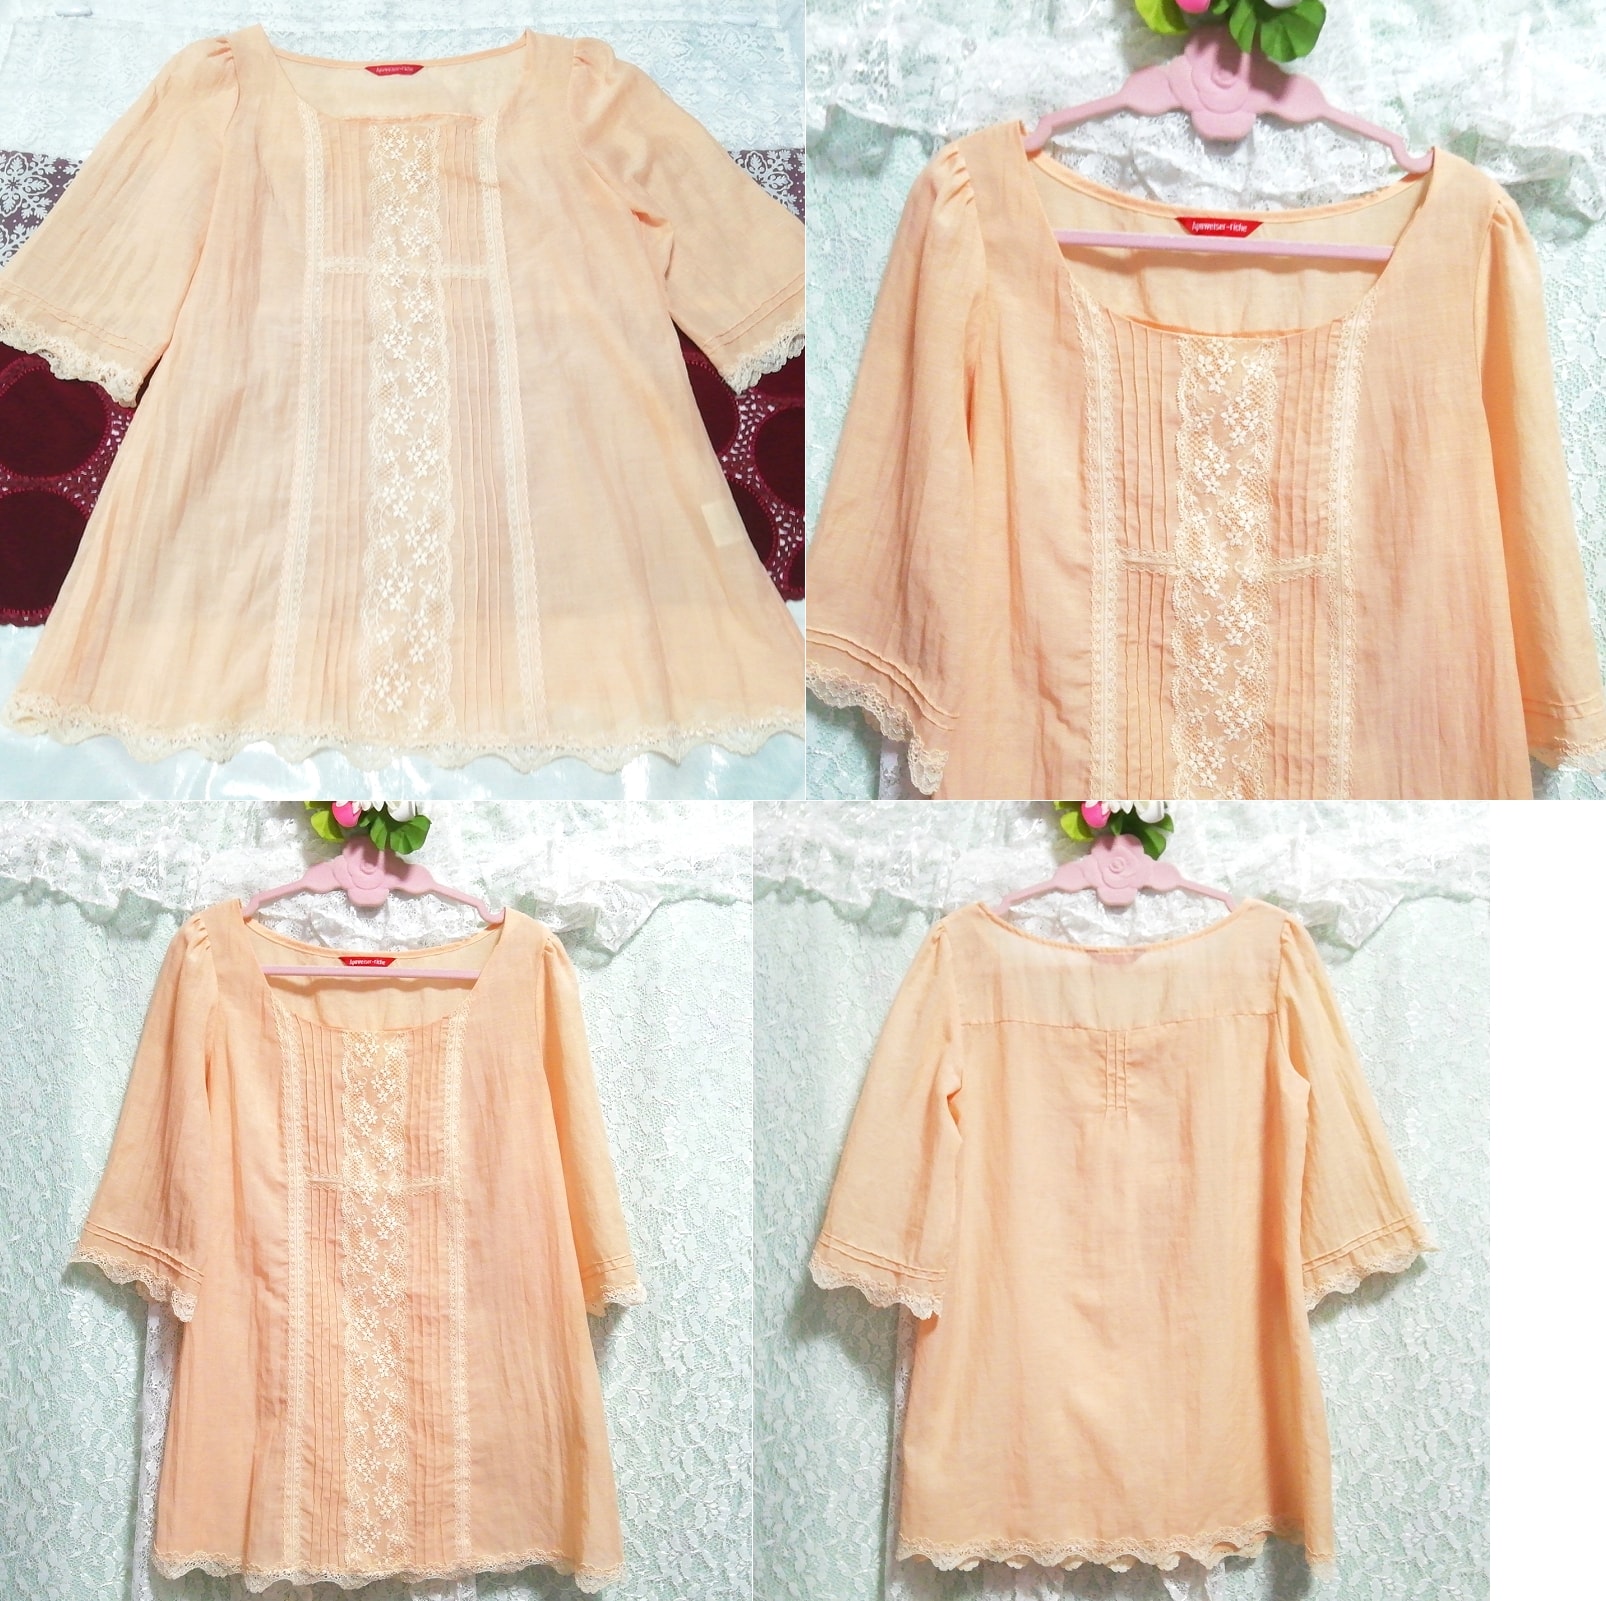 Orange lace short sleeve tunic negligee nightgown nightwear dress, tunic, long sleeve, m size